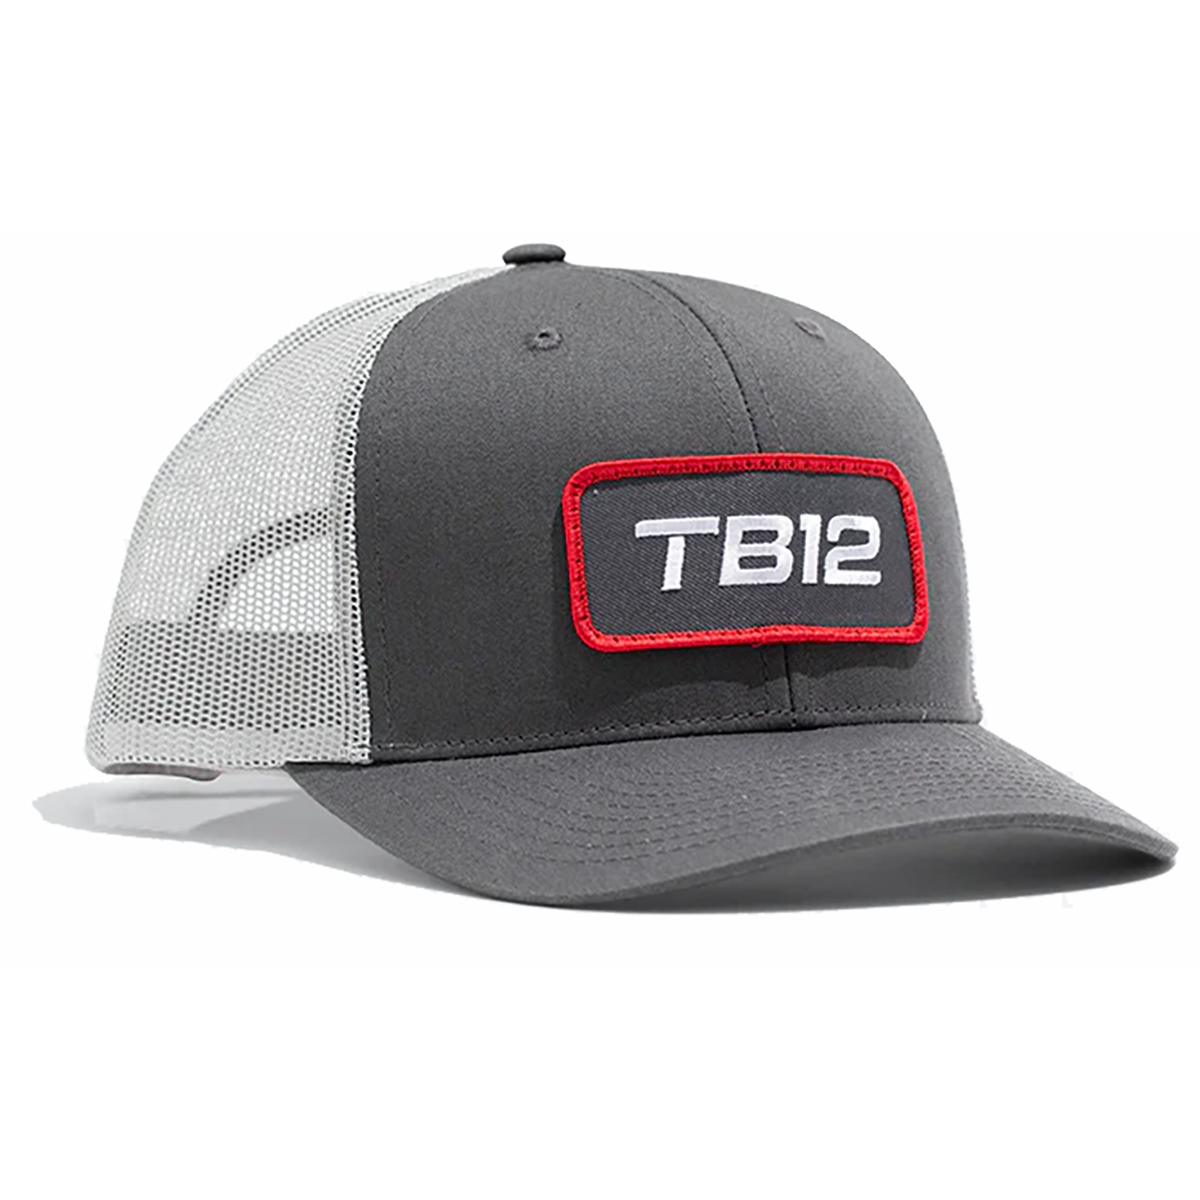 TB12 Wordmark Trucker Hat, , large image number null